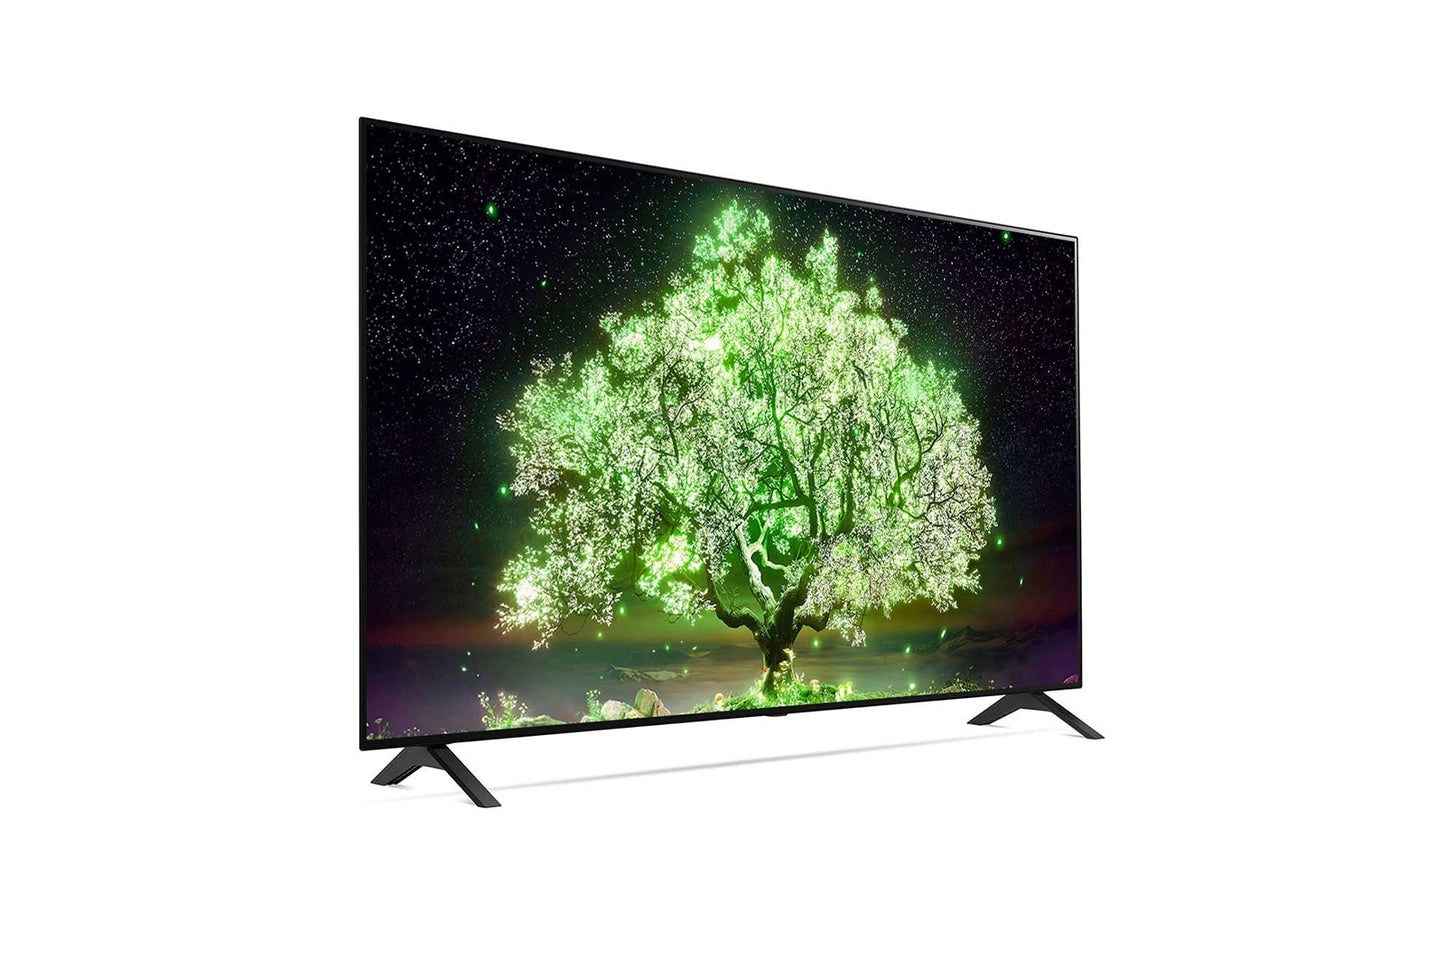 TV 55 LG - 4K - OLED - THINQ AI 4K SMART